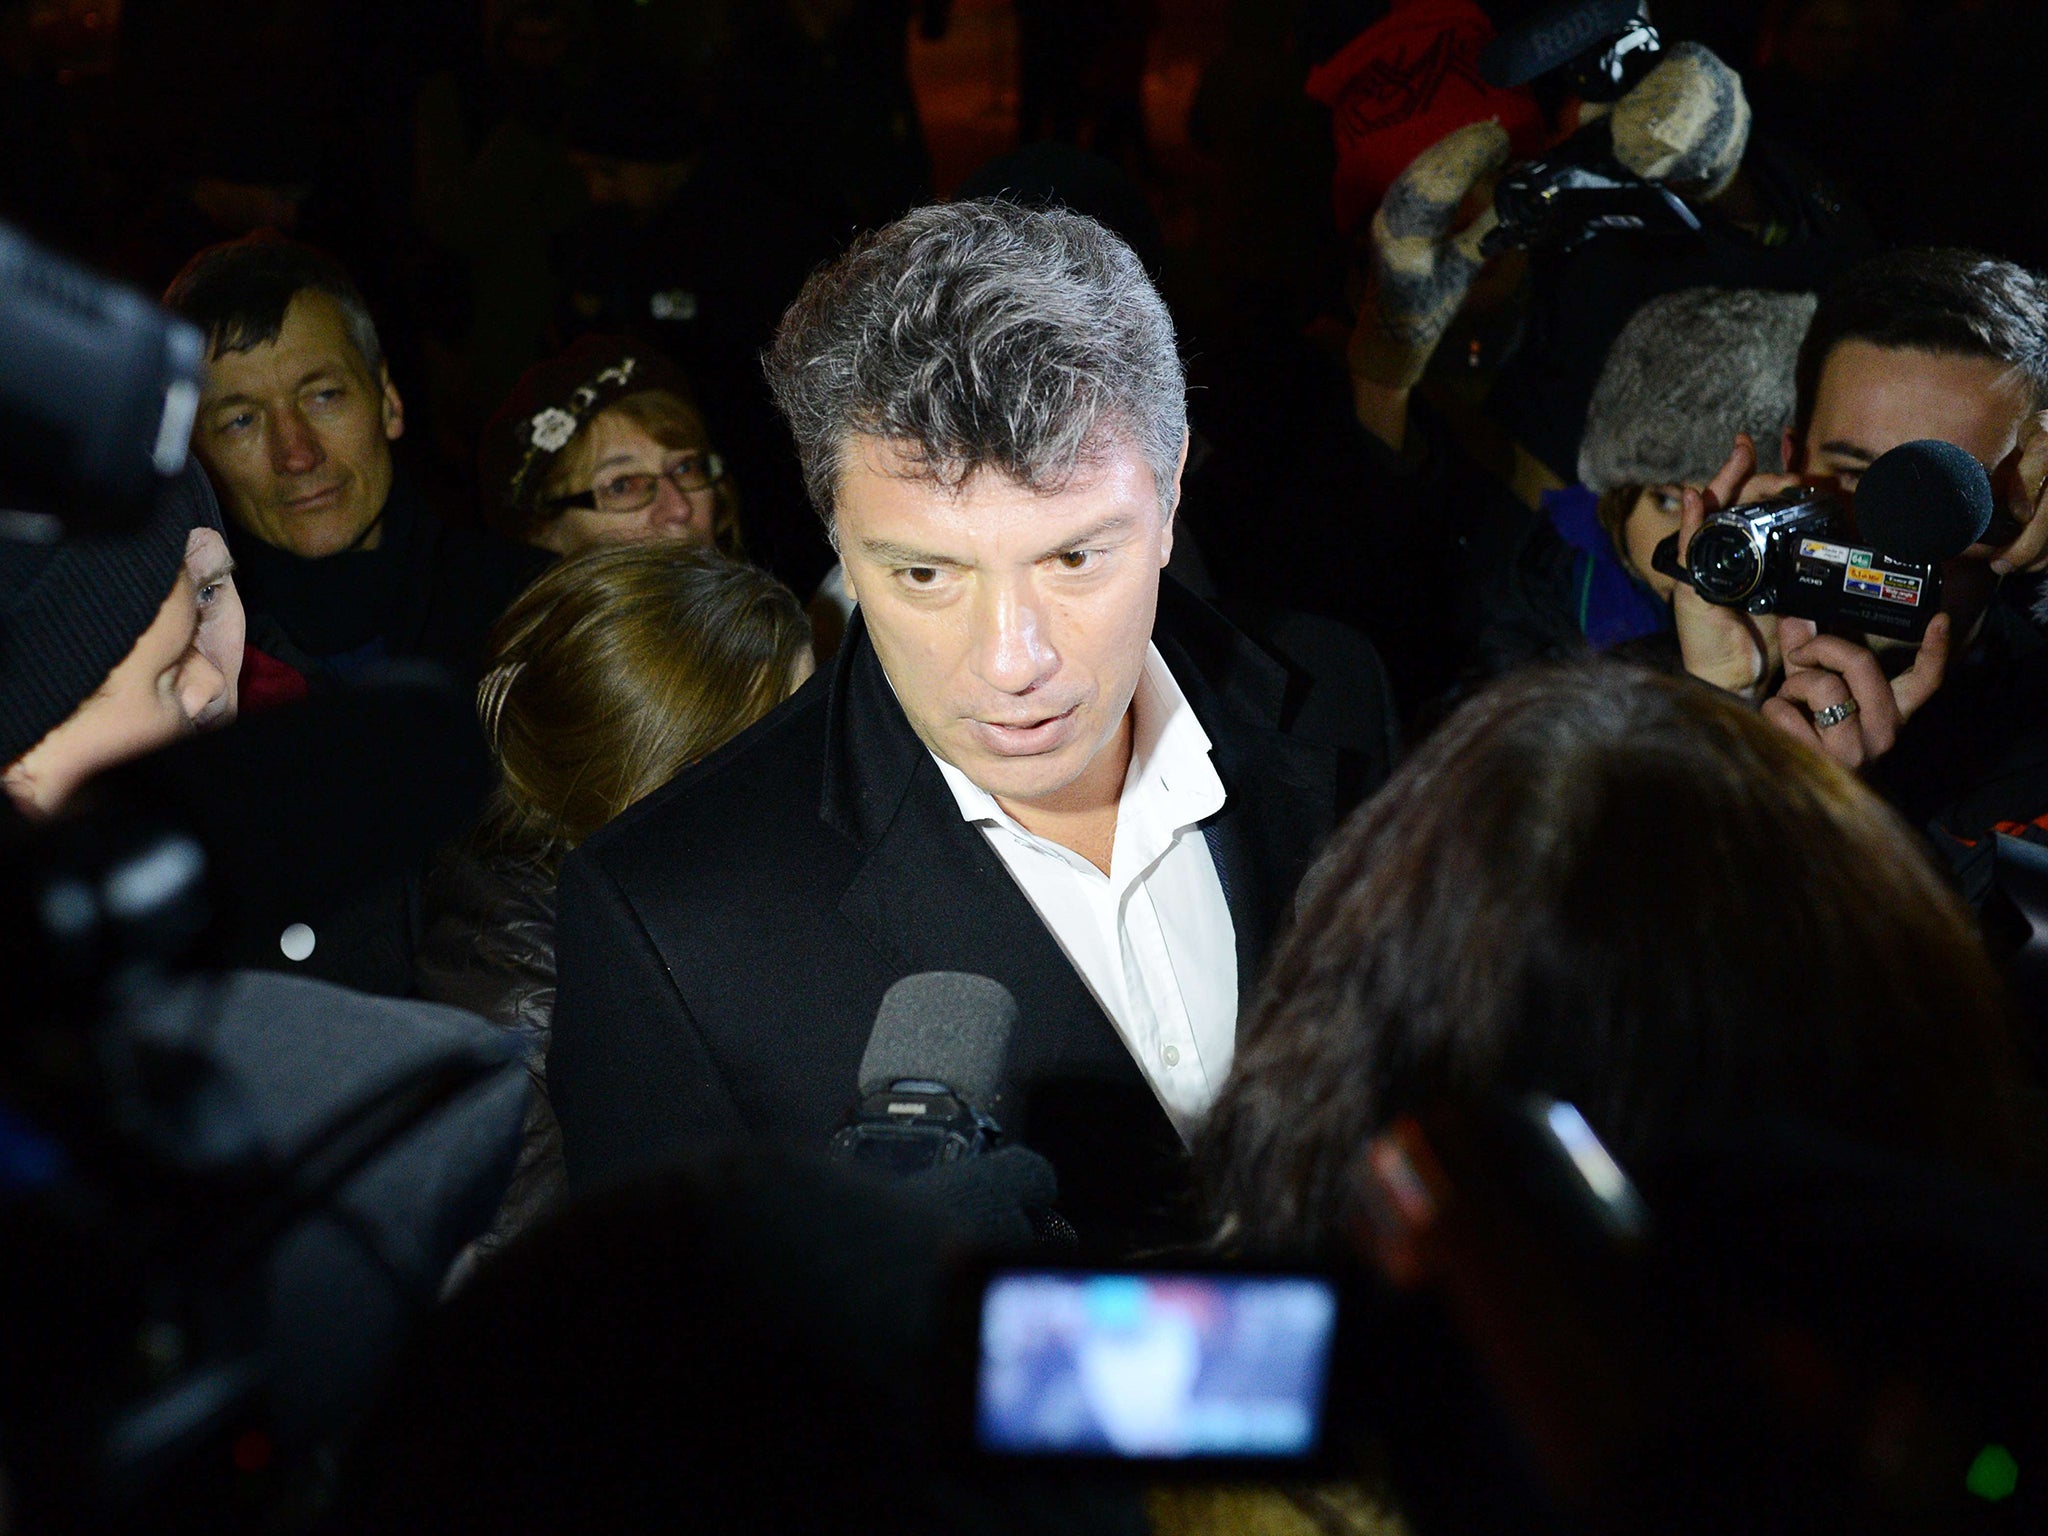 Nemtsov stood against corruption in Russia